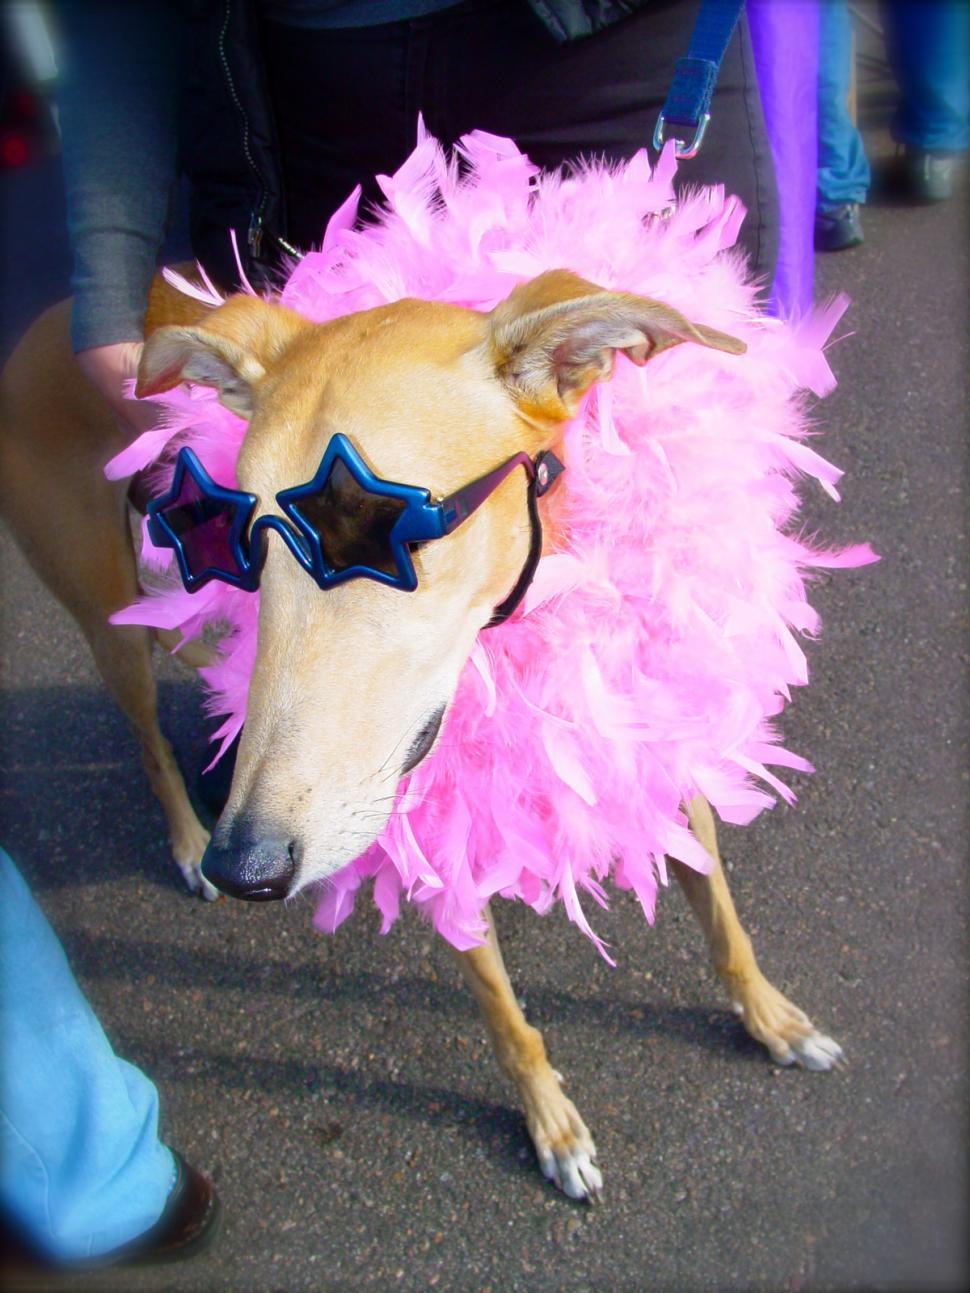 Free Image of Dog Costume in Sunglasses 